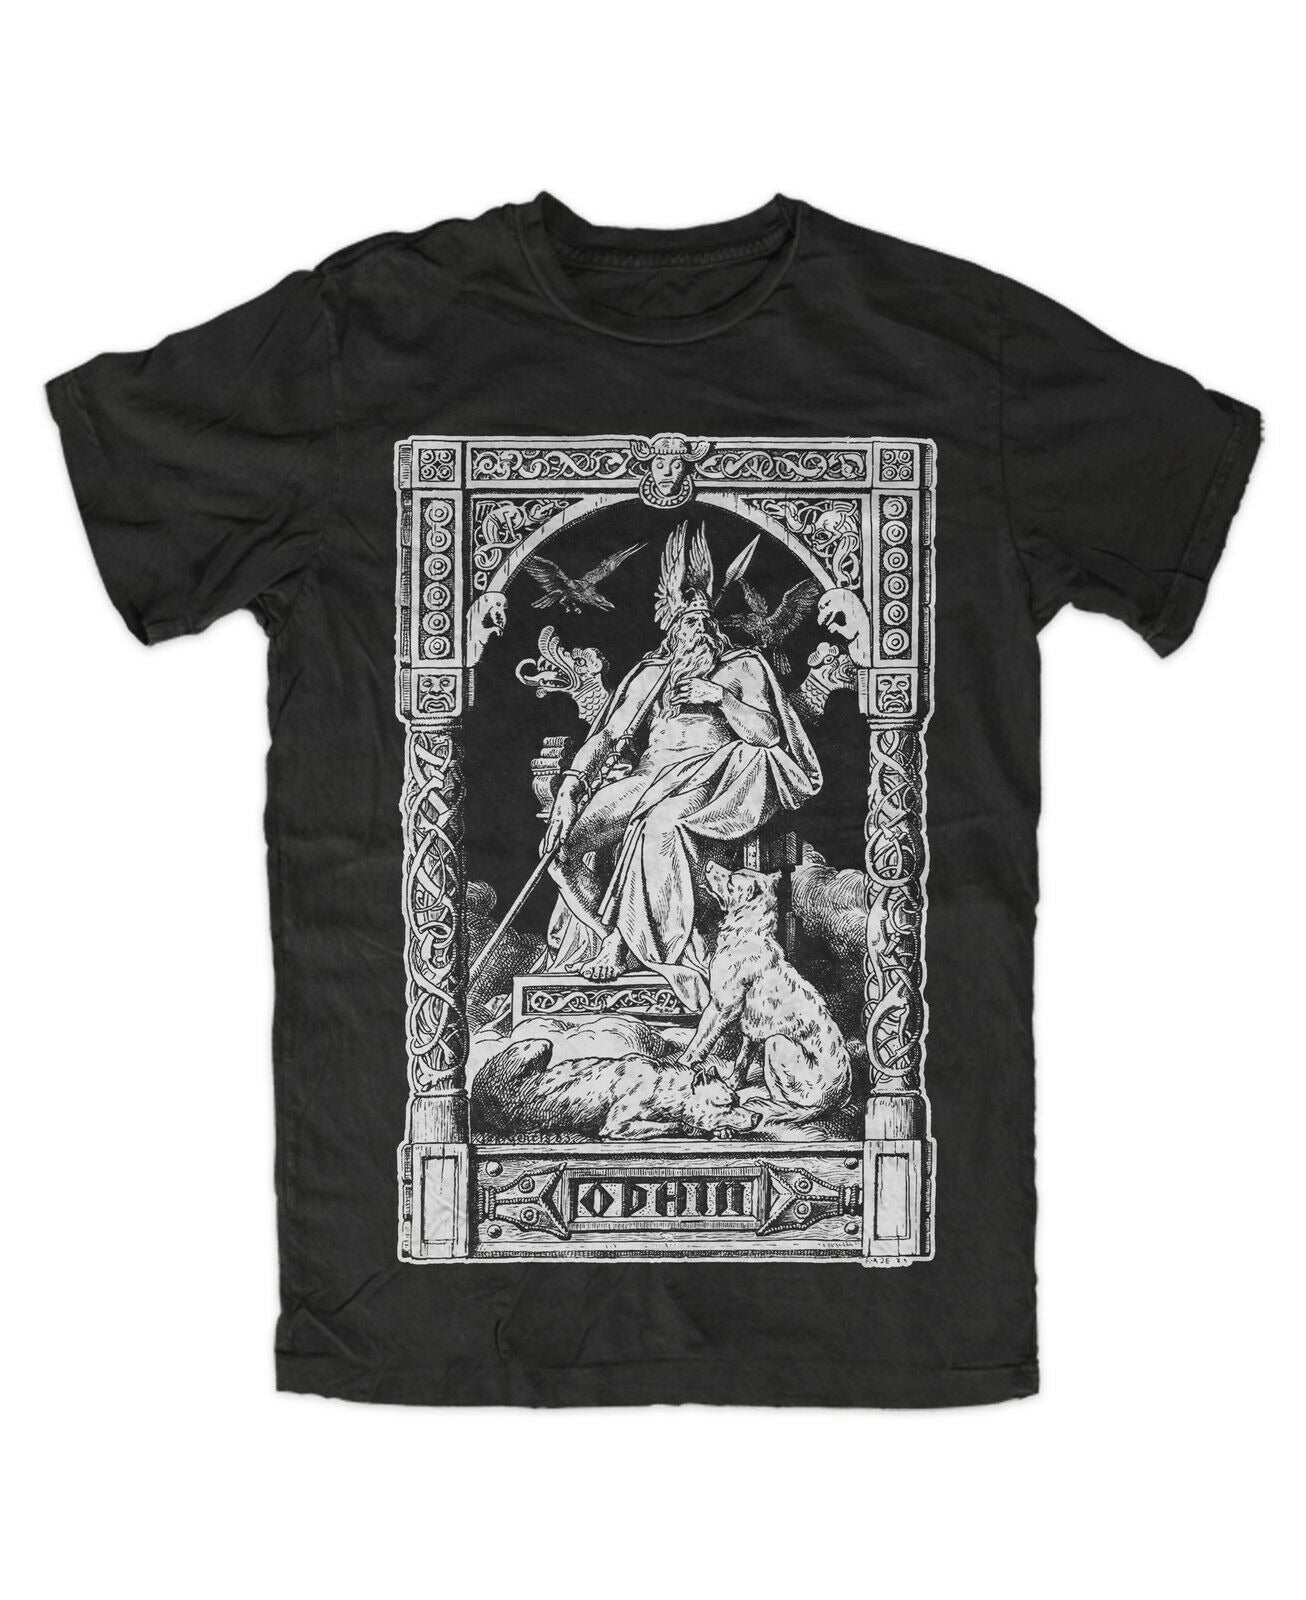 Viking T-Shirt - Allfather